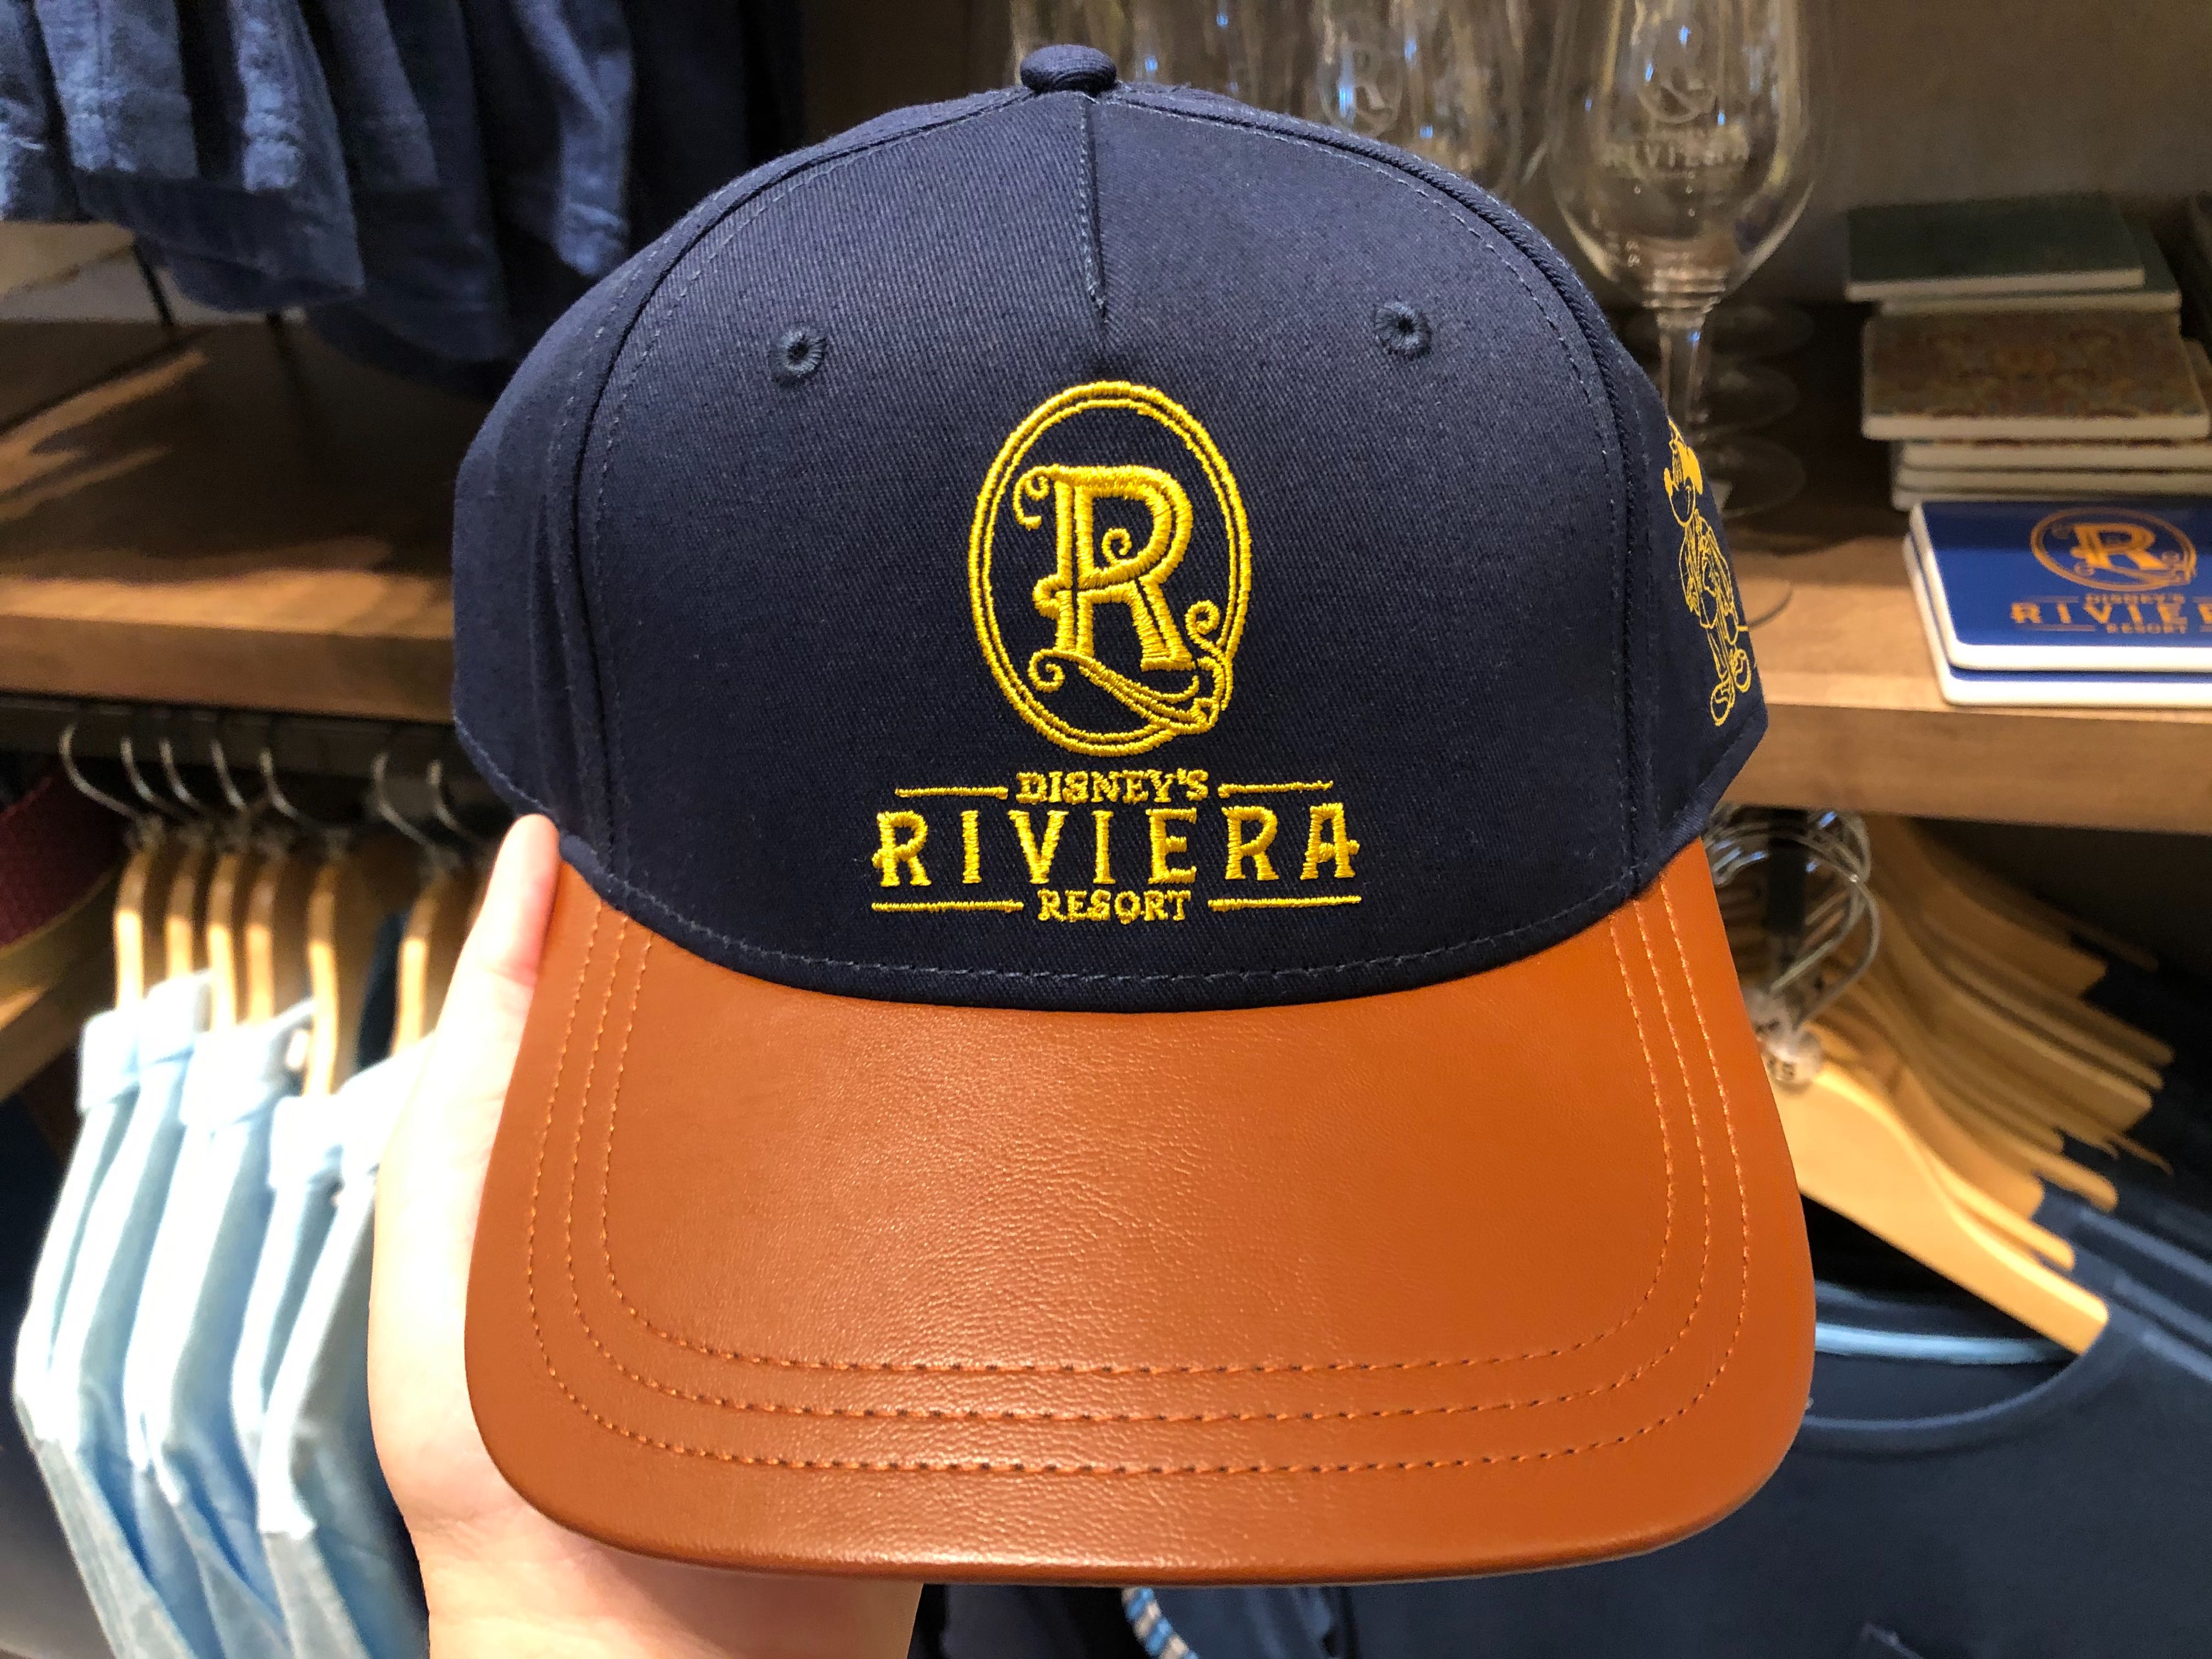 Riviera Resort Baseball Hat - $29.99